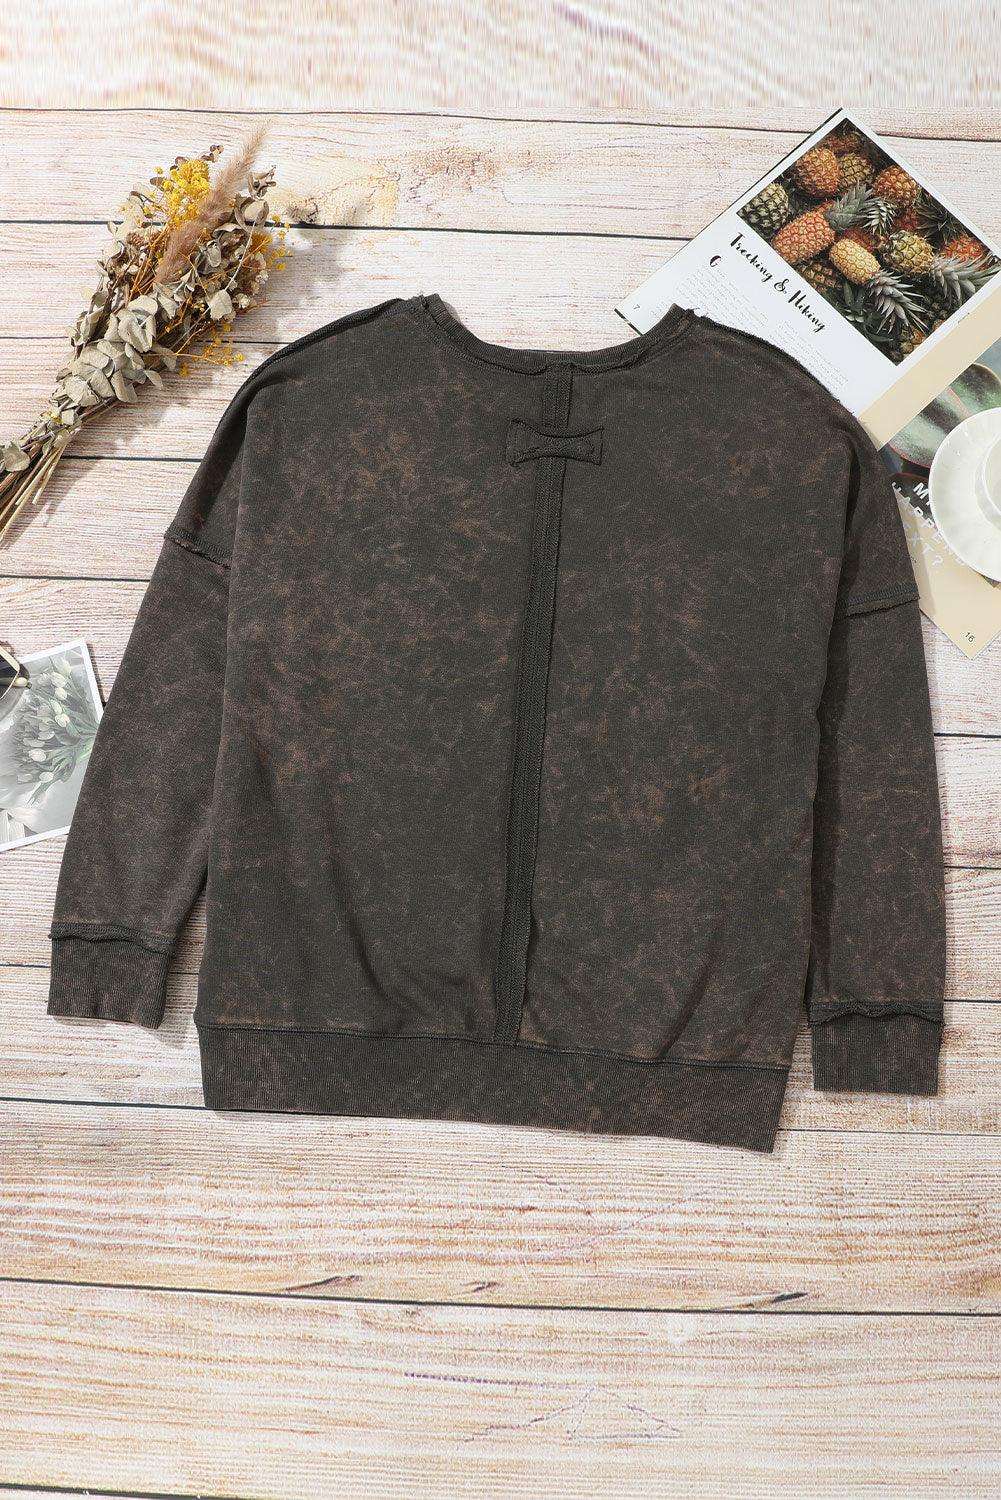 Gray Acid Wash Drop Shoulder Long Sleeve Sweatshirt with Pockets - L & M Kee, LLC